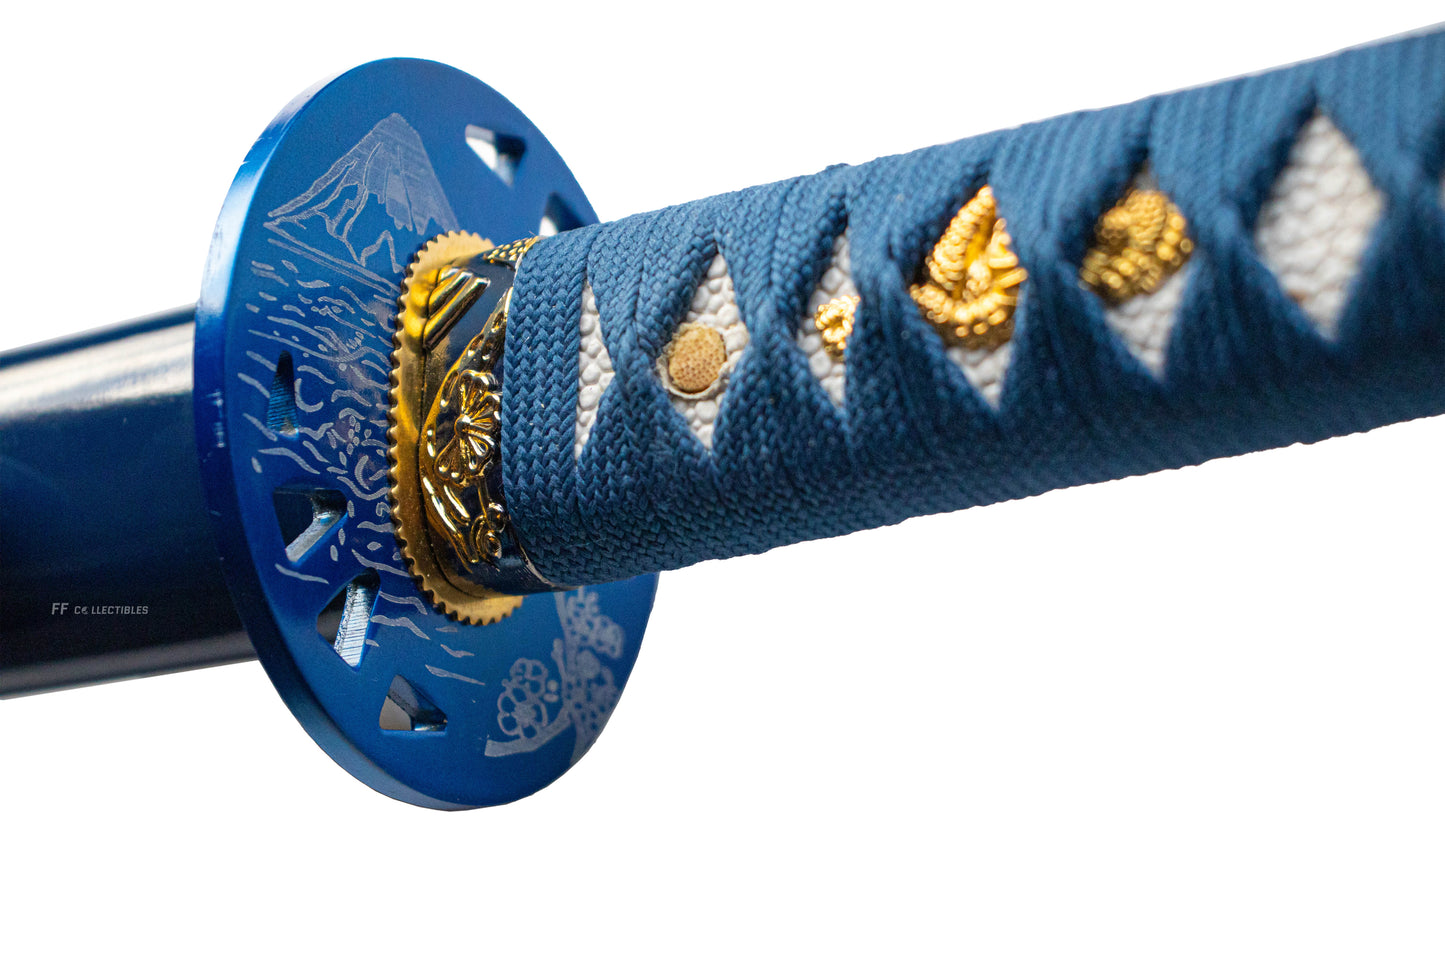 BLUE SAKURA - HAND FORGED CARBON STEEL JAPANESE KATANA (with FREE sword stand)